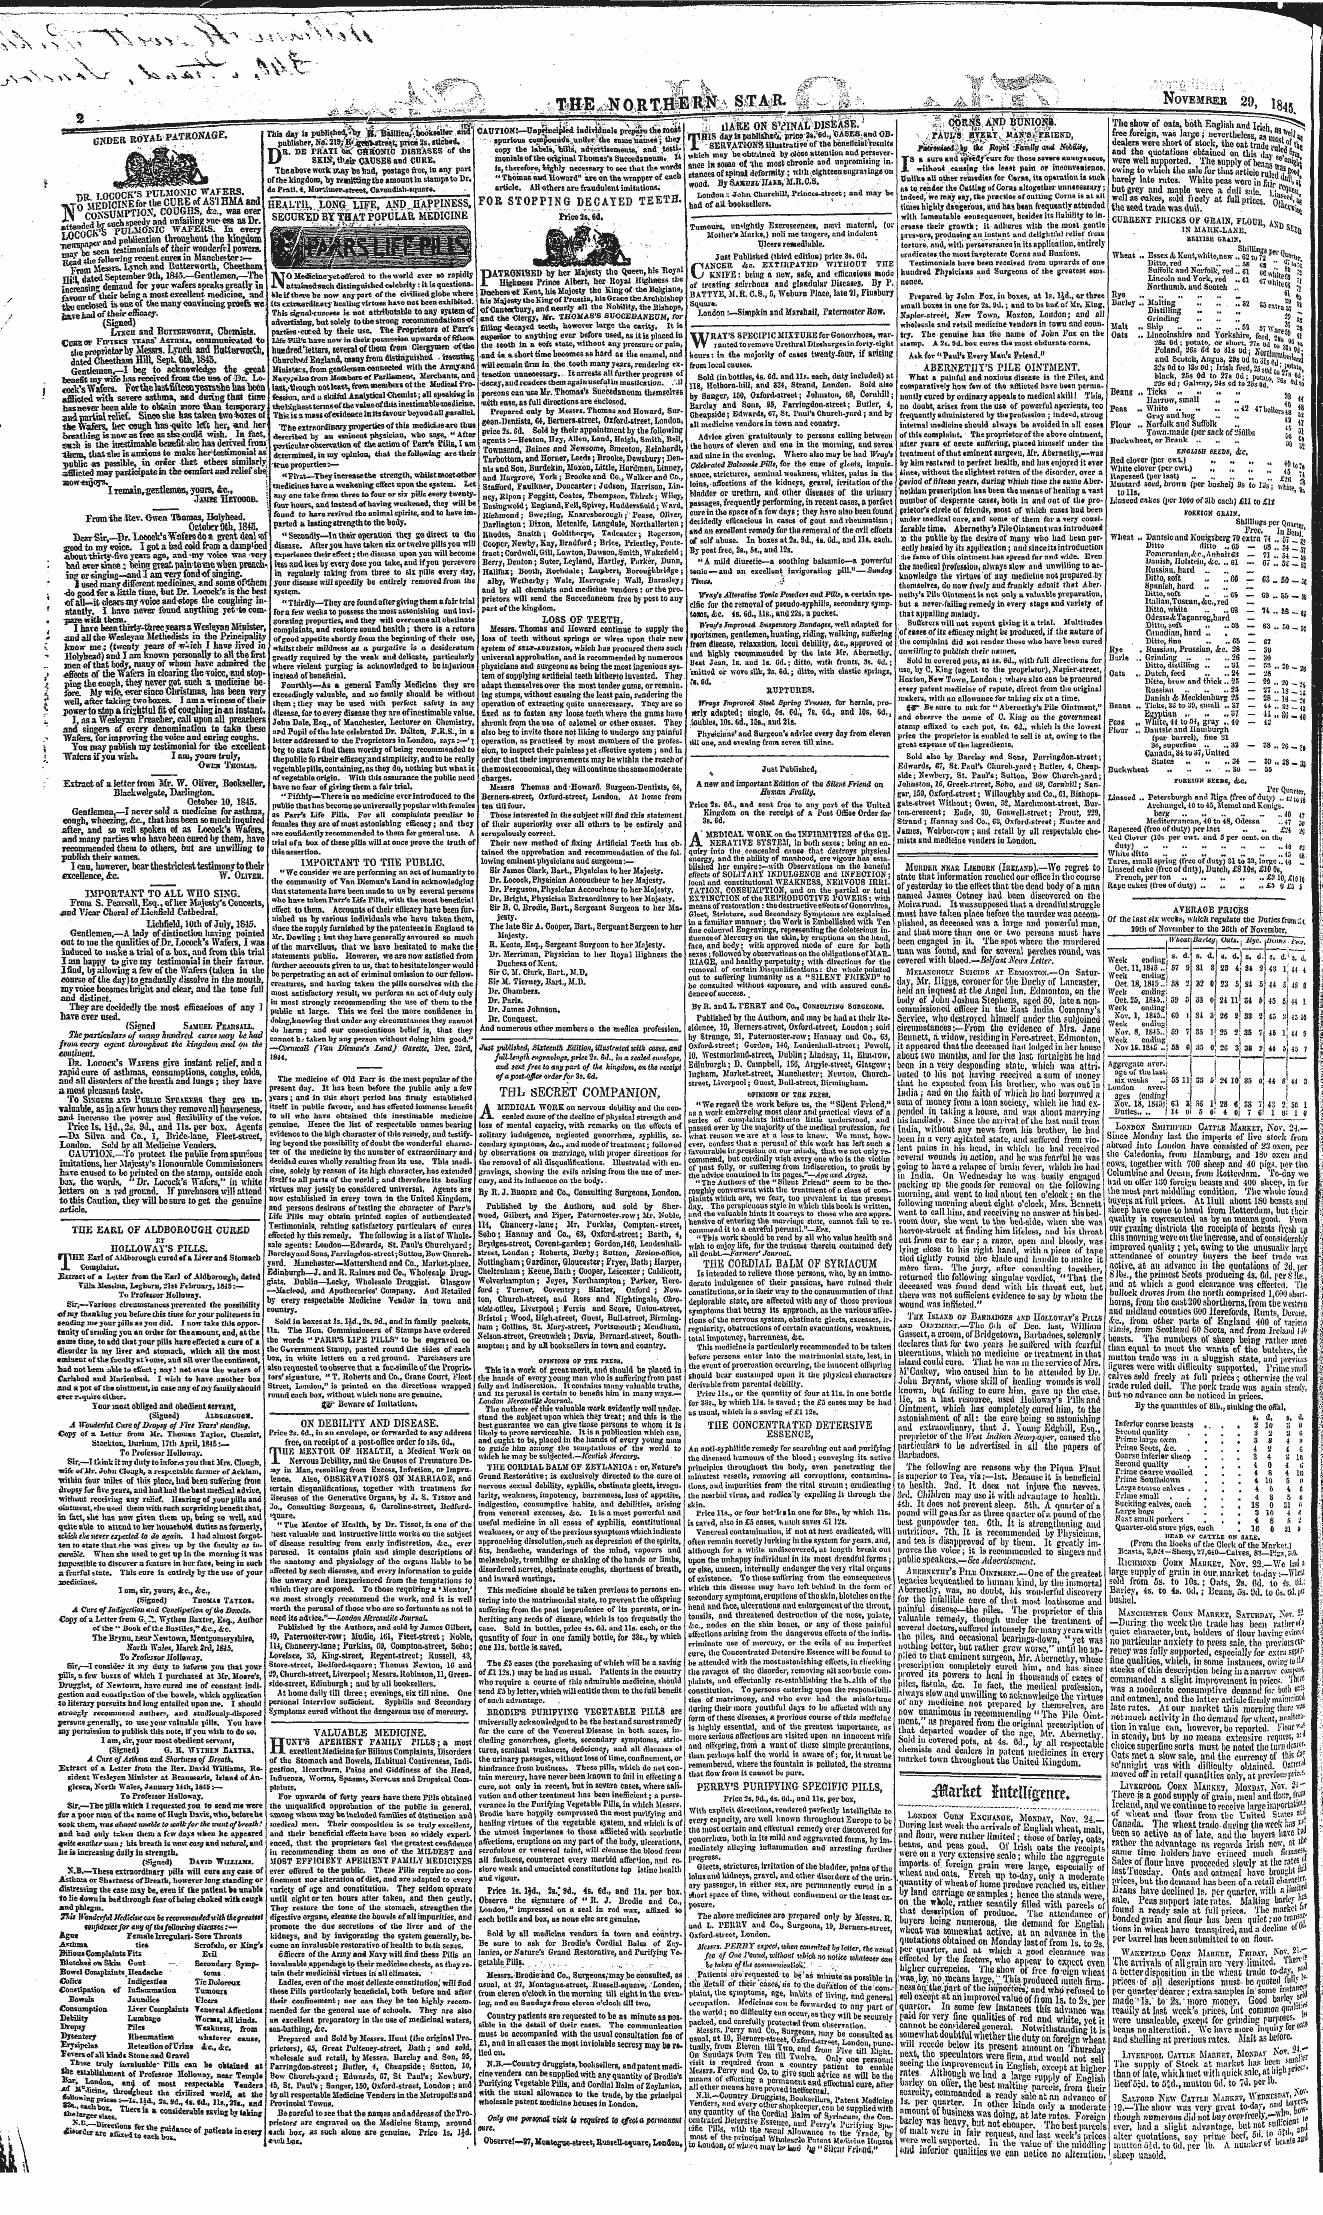 Northern Star (1837-1852): jS F Y, 4th edition - Ad00221